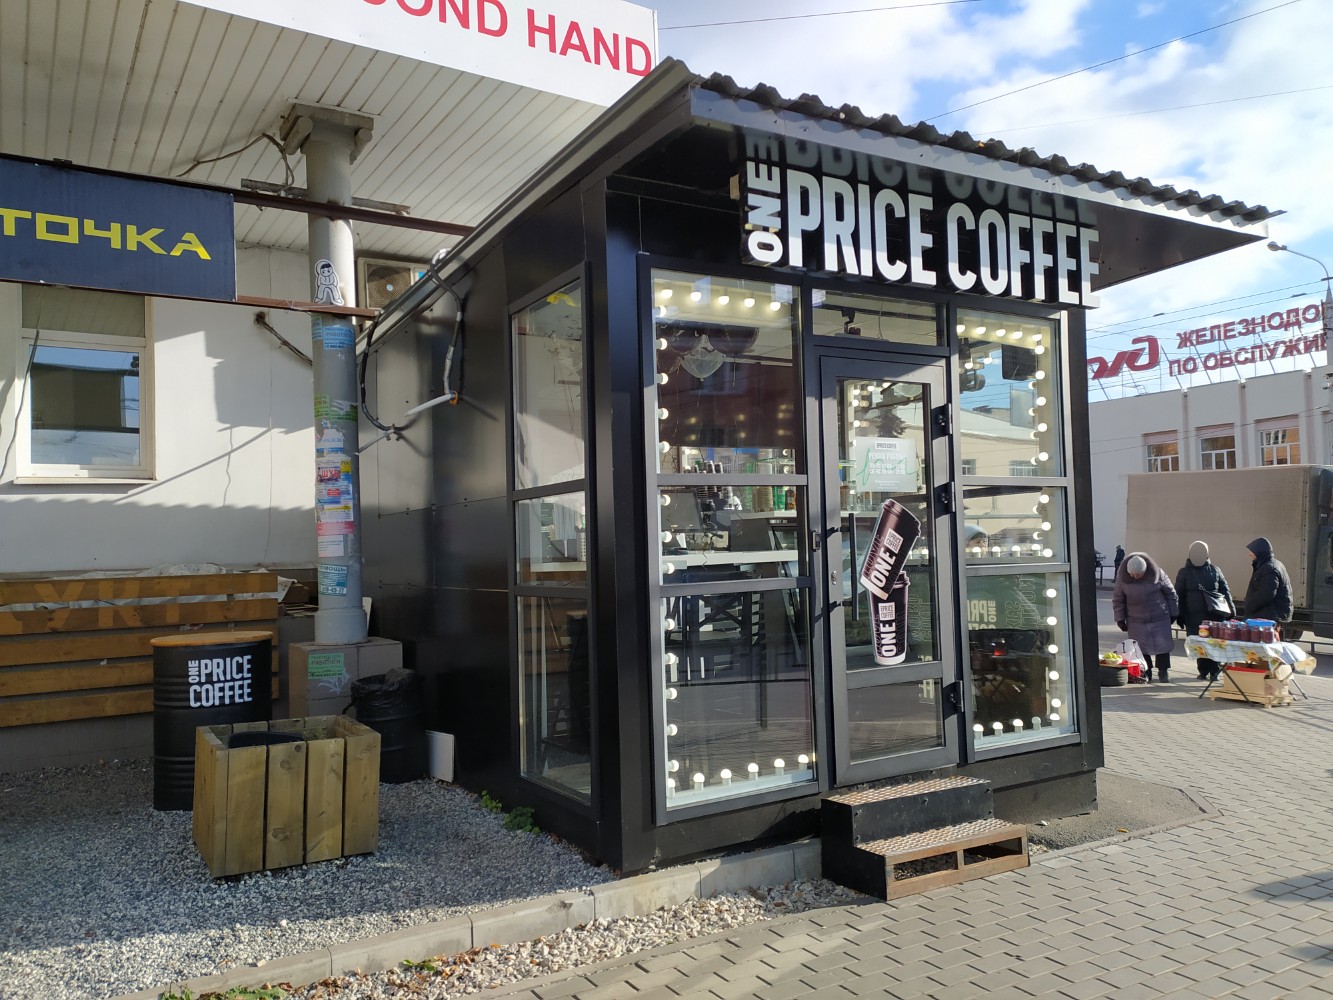 Tasting Bar with coffee and espresso drinks – Brio Coffeeworks